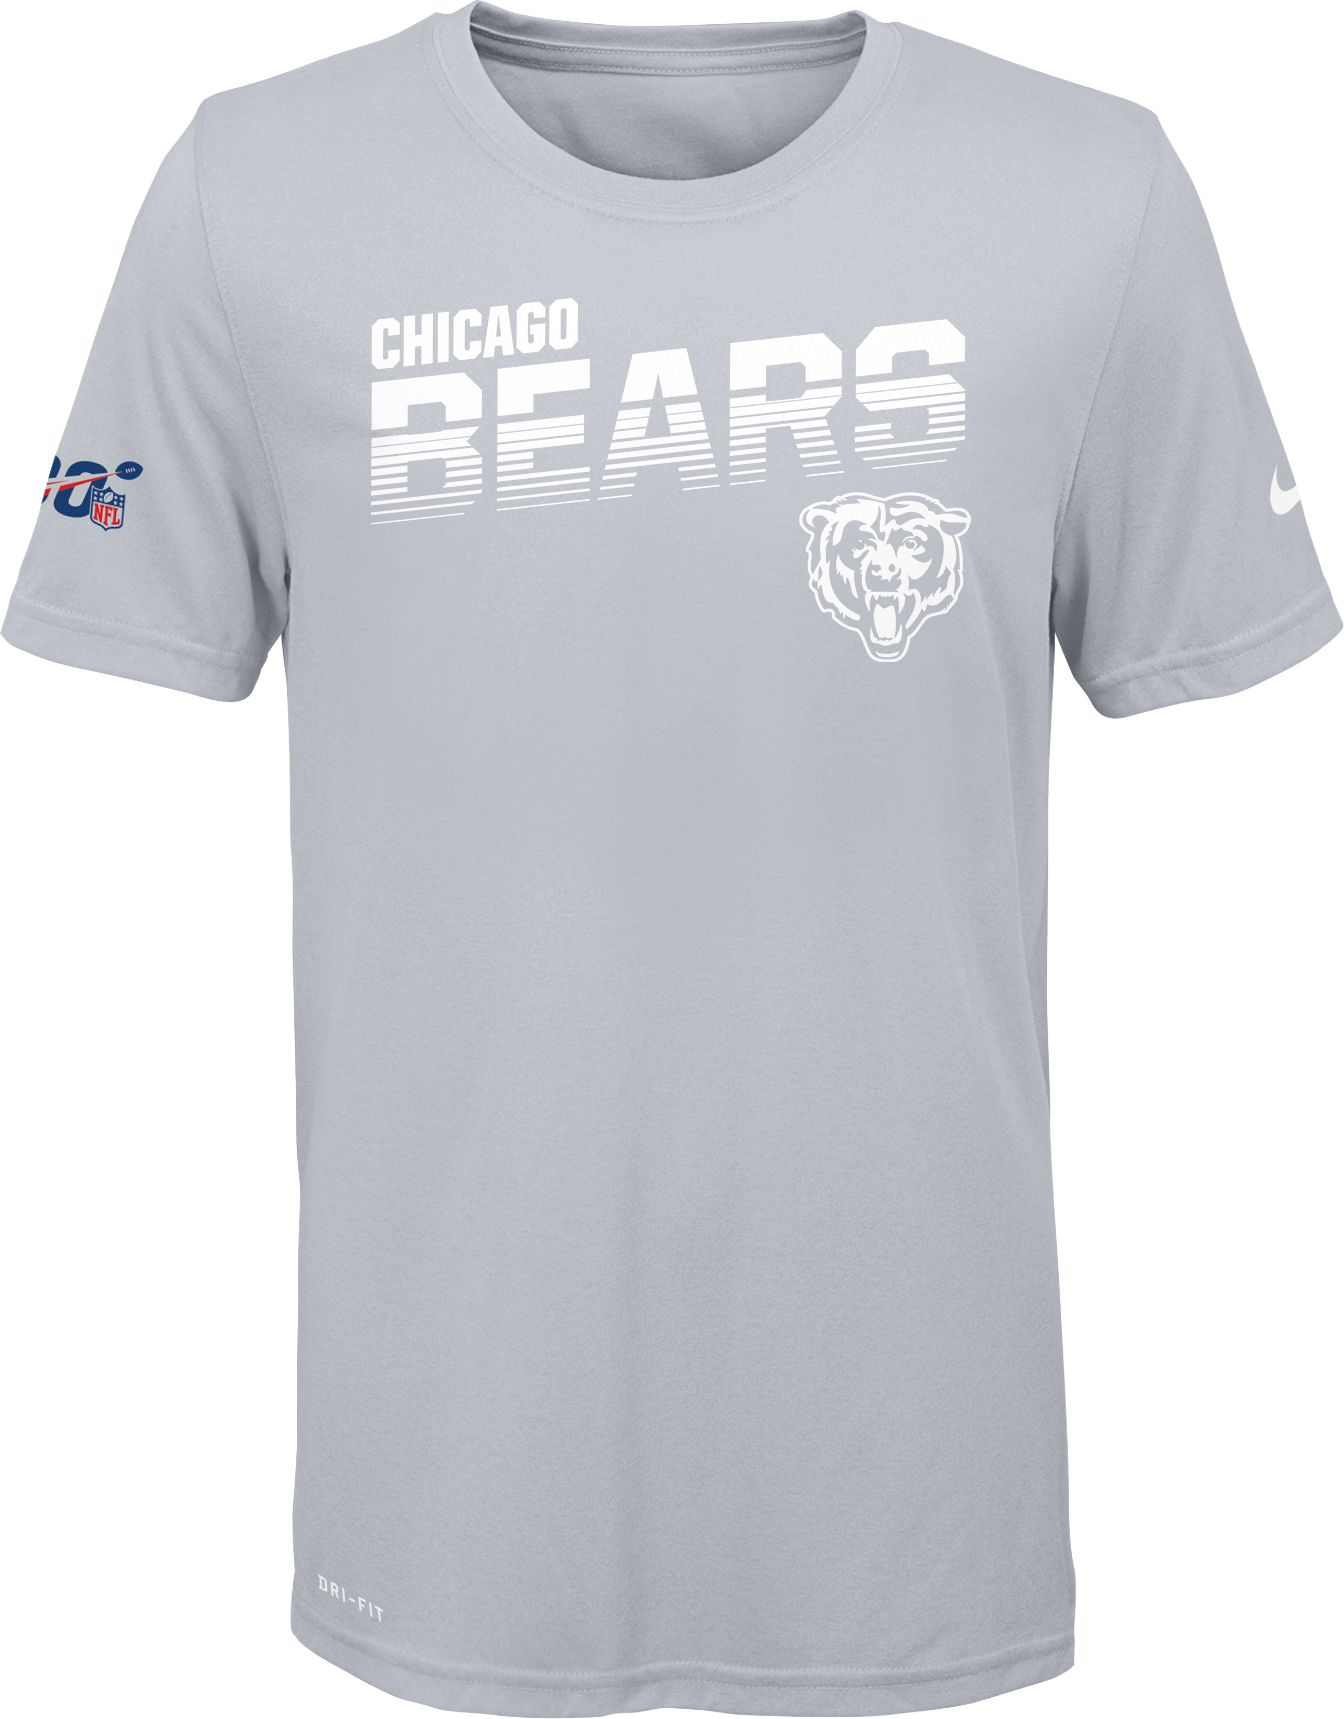 white chicago bears t shirt